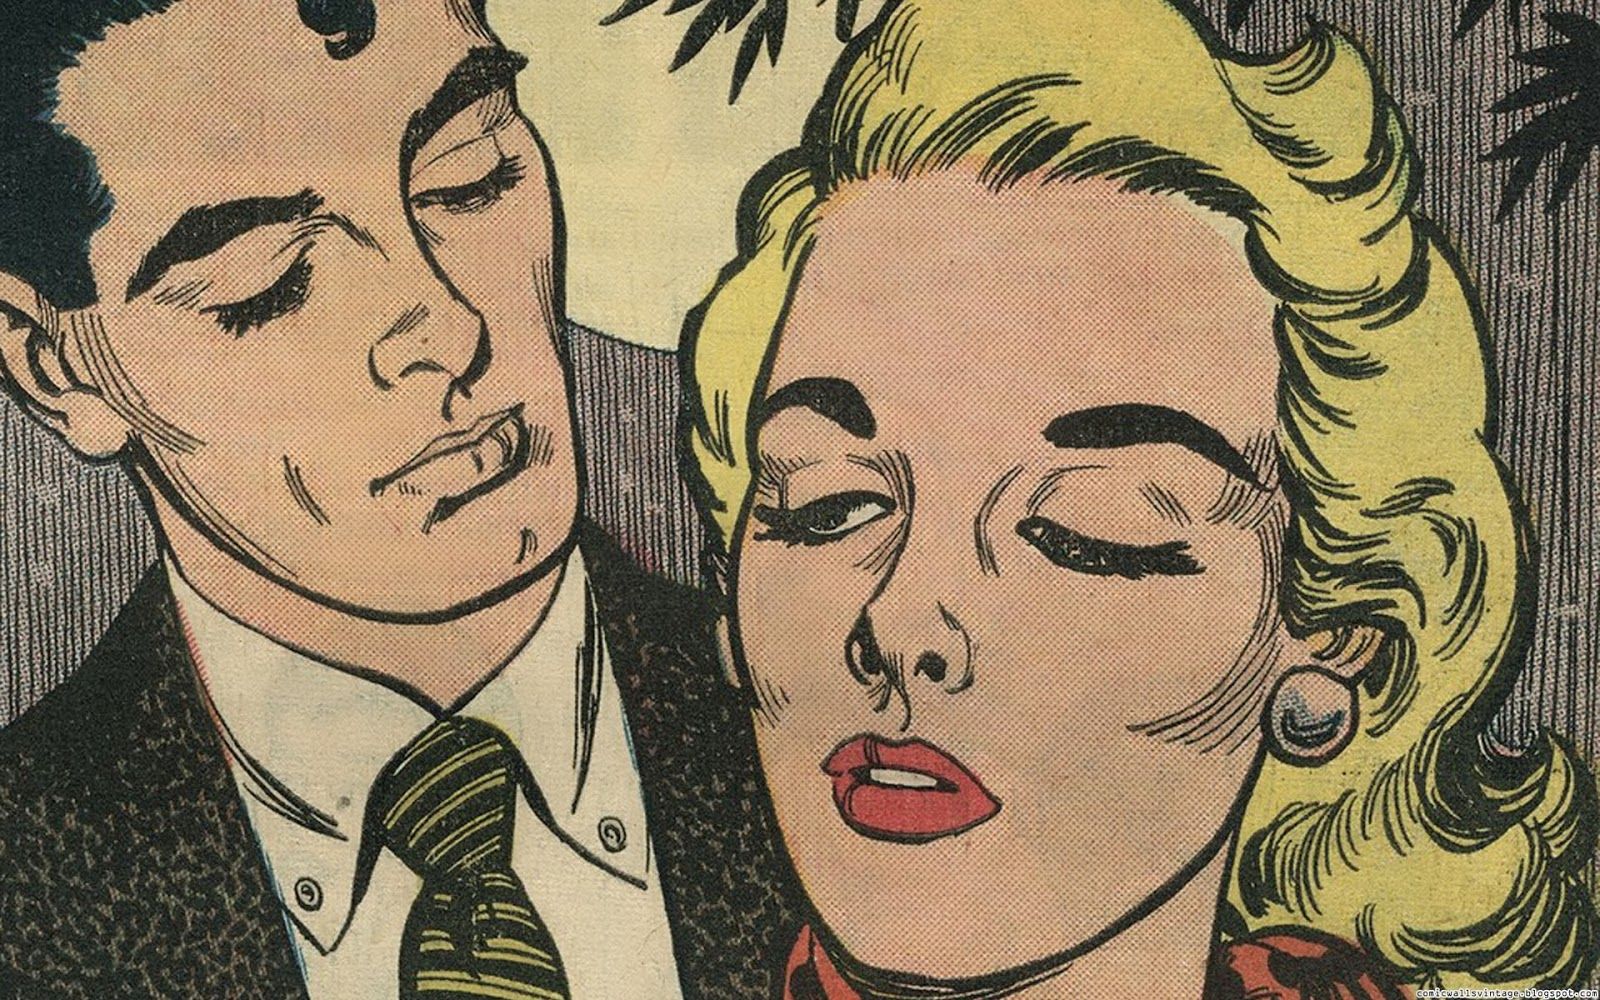 Comic Wallpaper Vintage: Love is in the air (Vintage Comic Wallpaper)